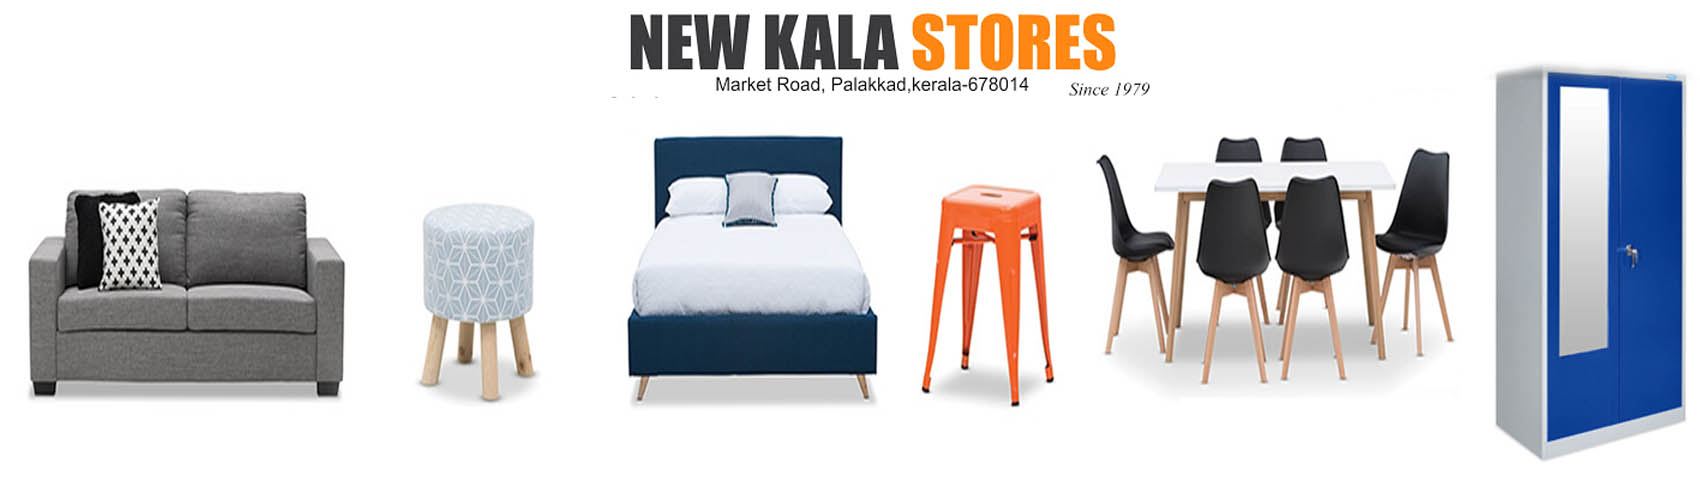 New Kala Stores